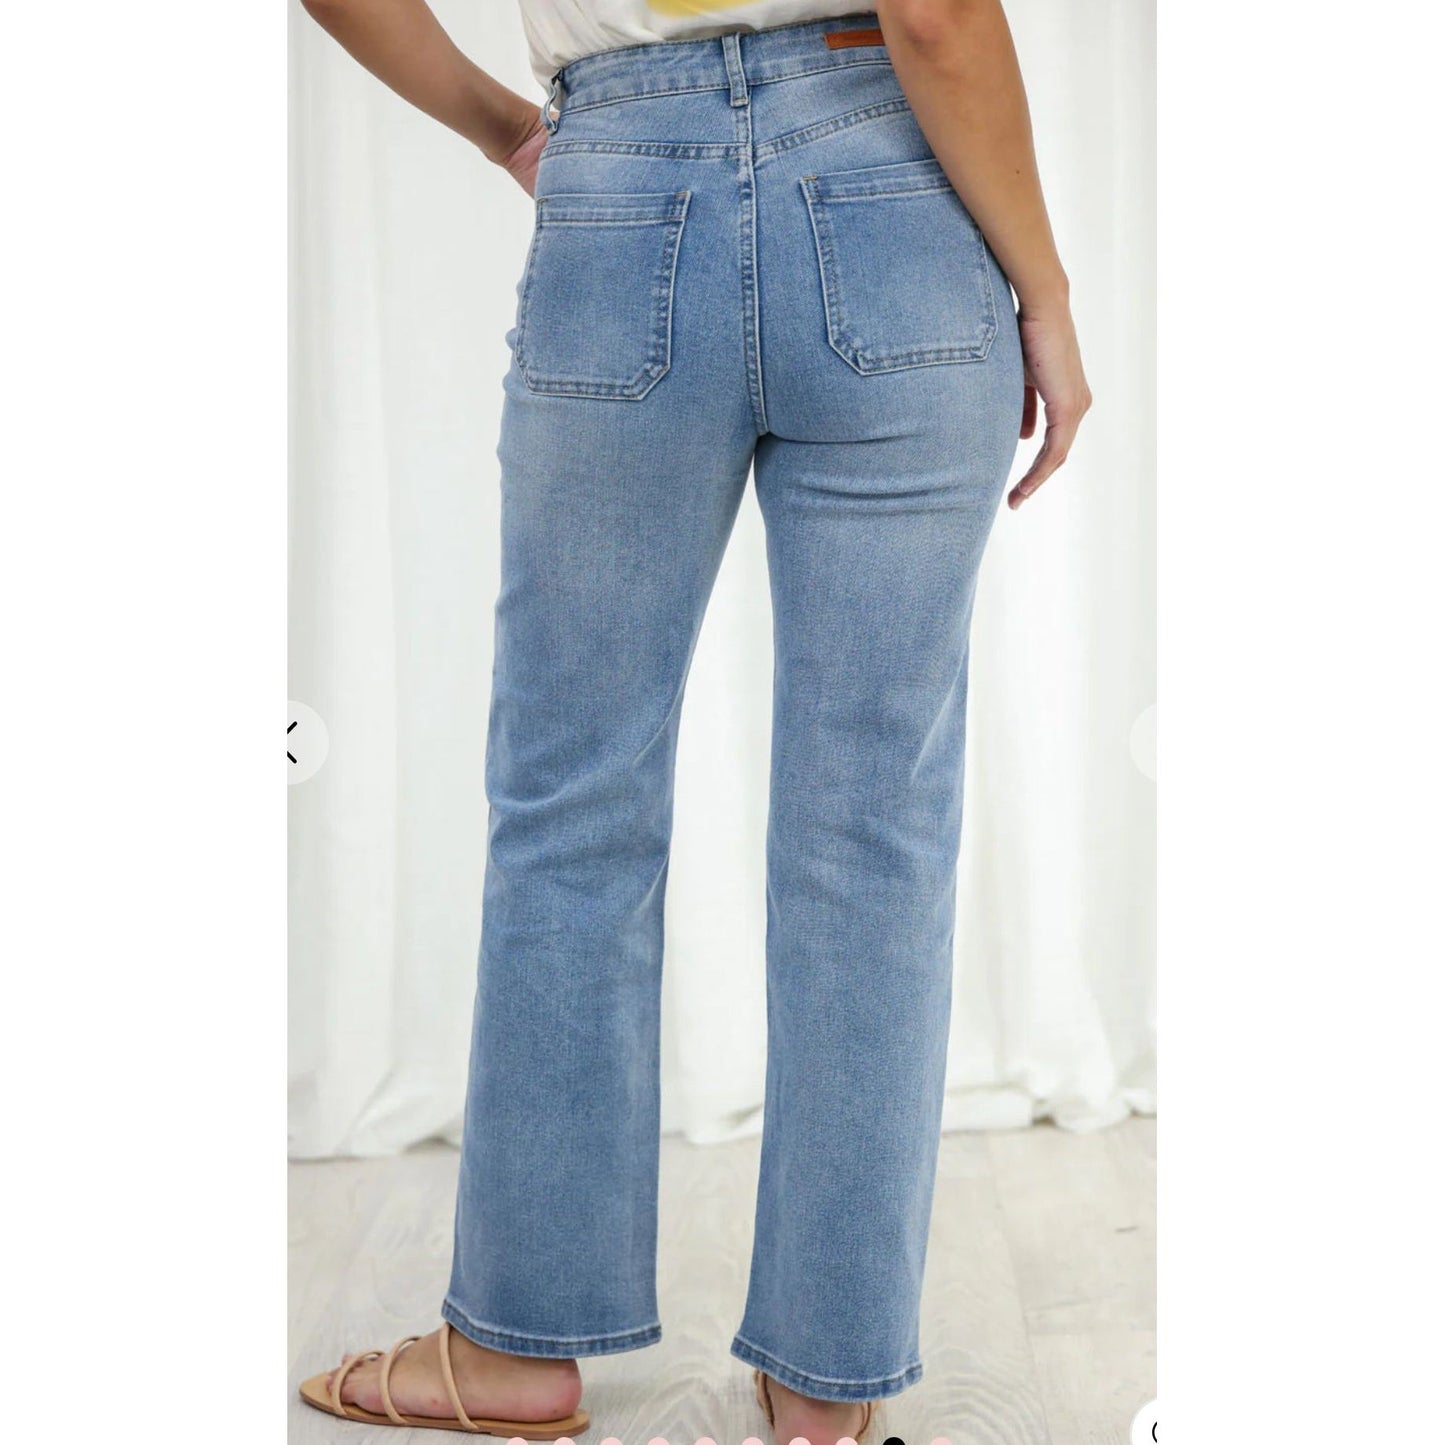 sarah jeans